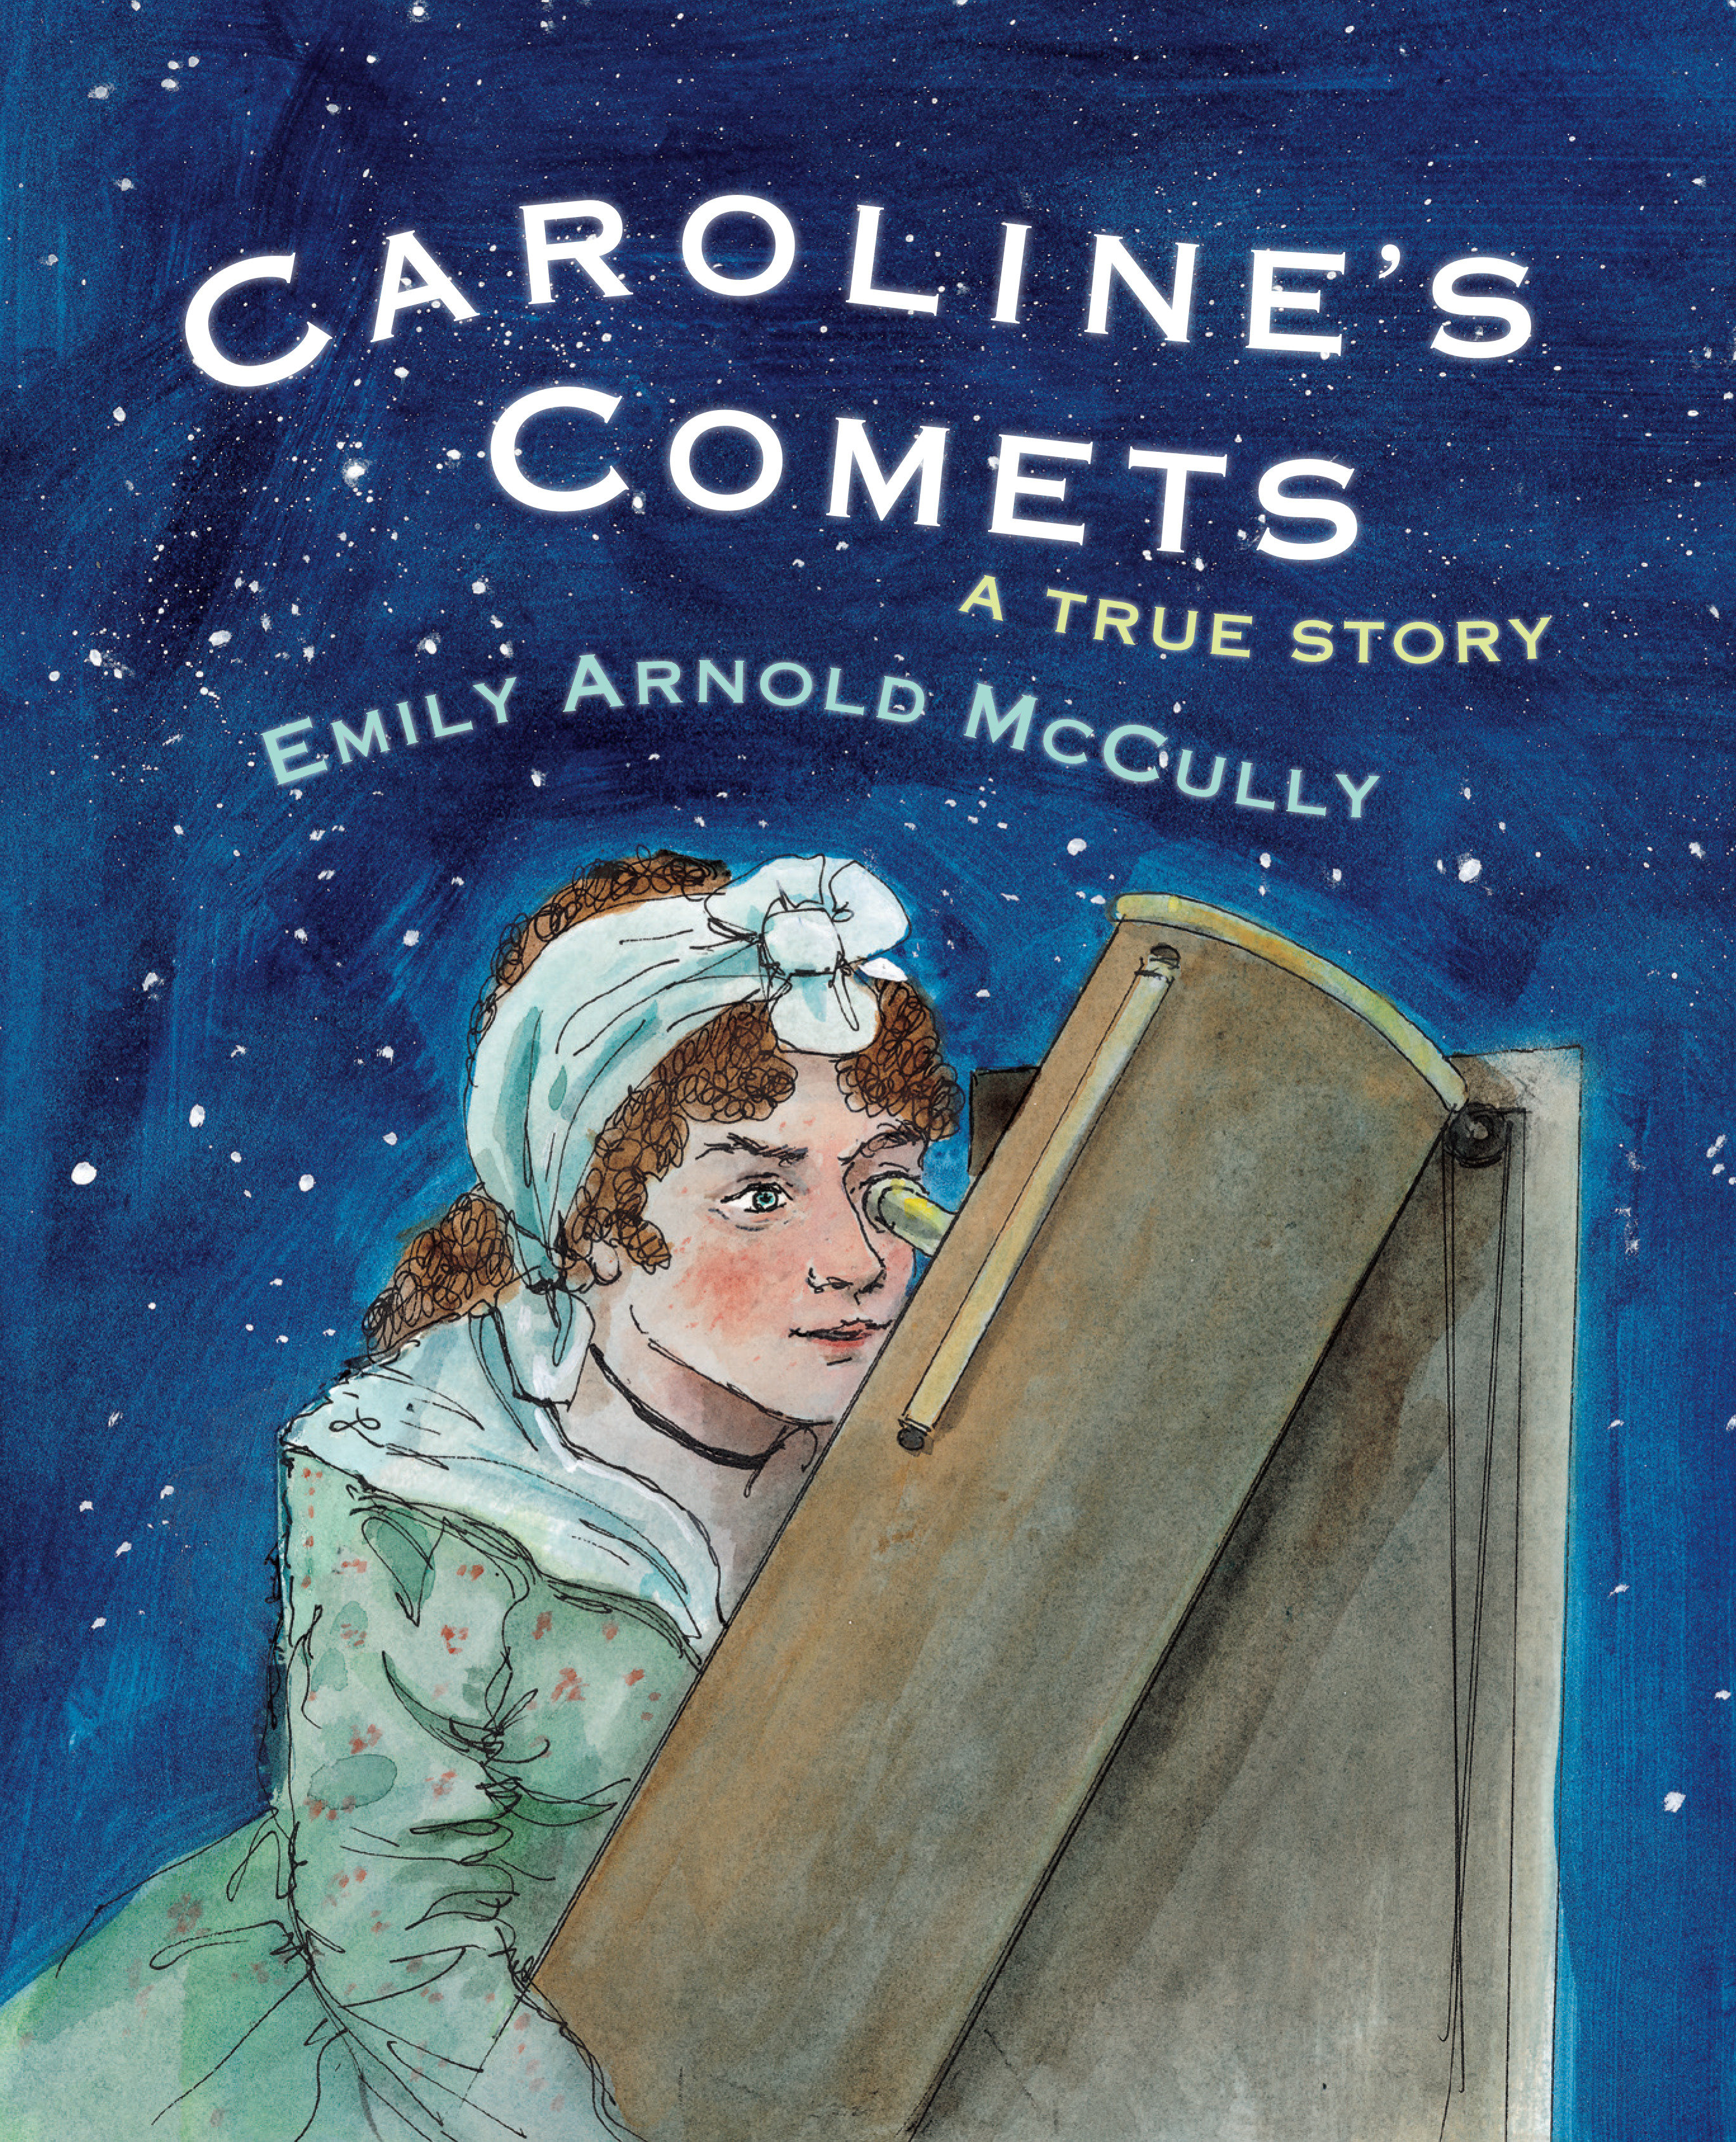 Caroline'S Comets (Hardcover Book)